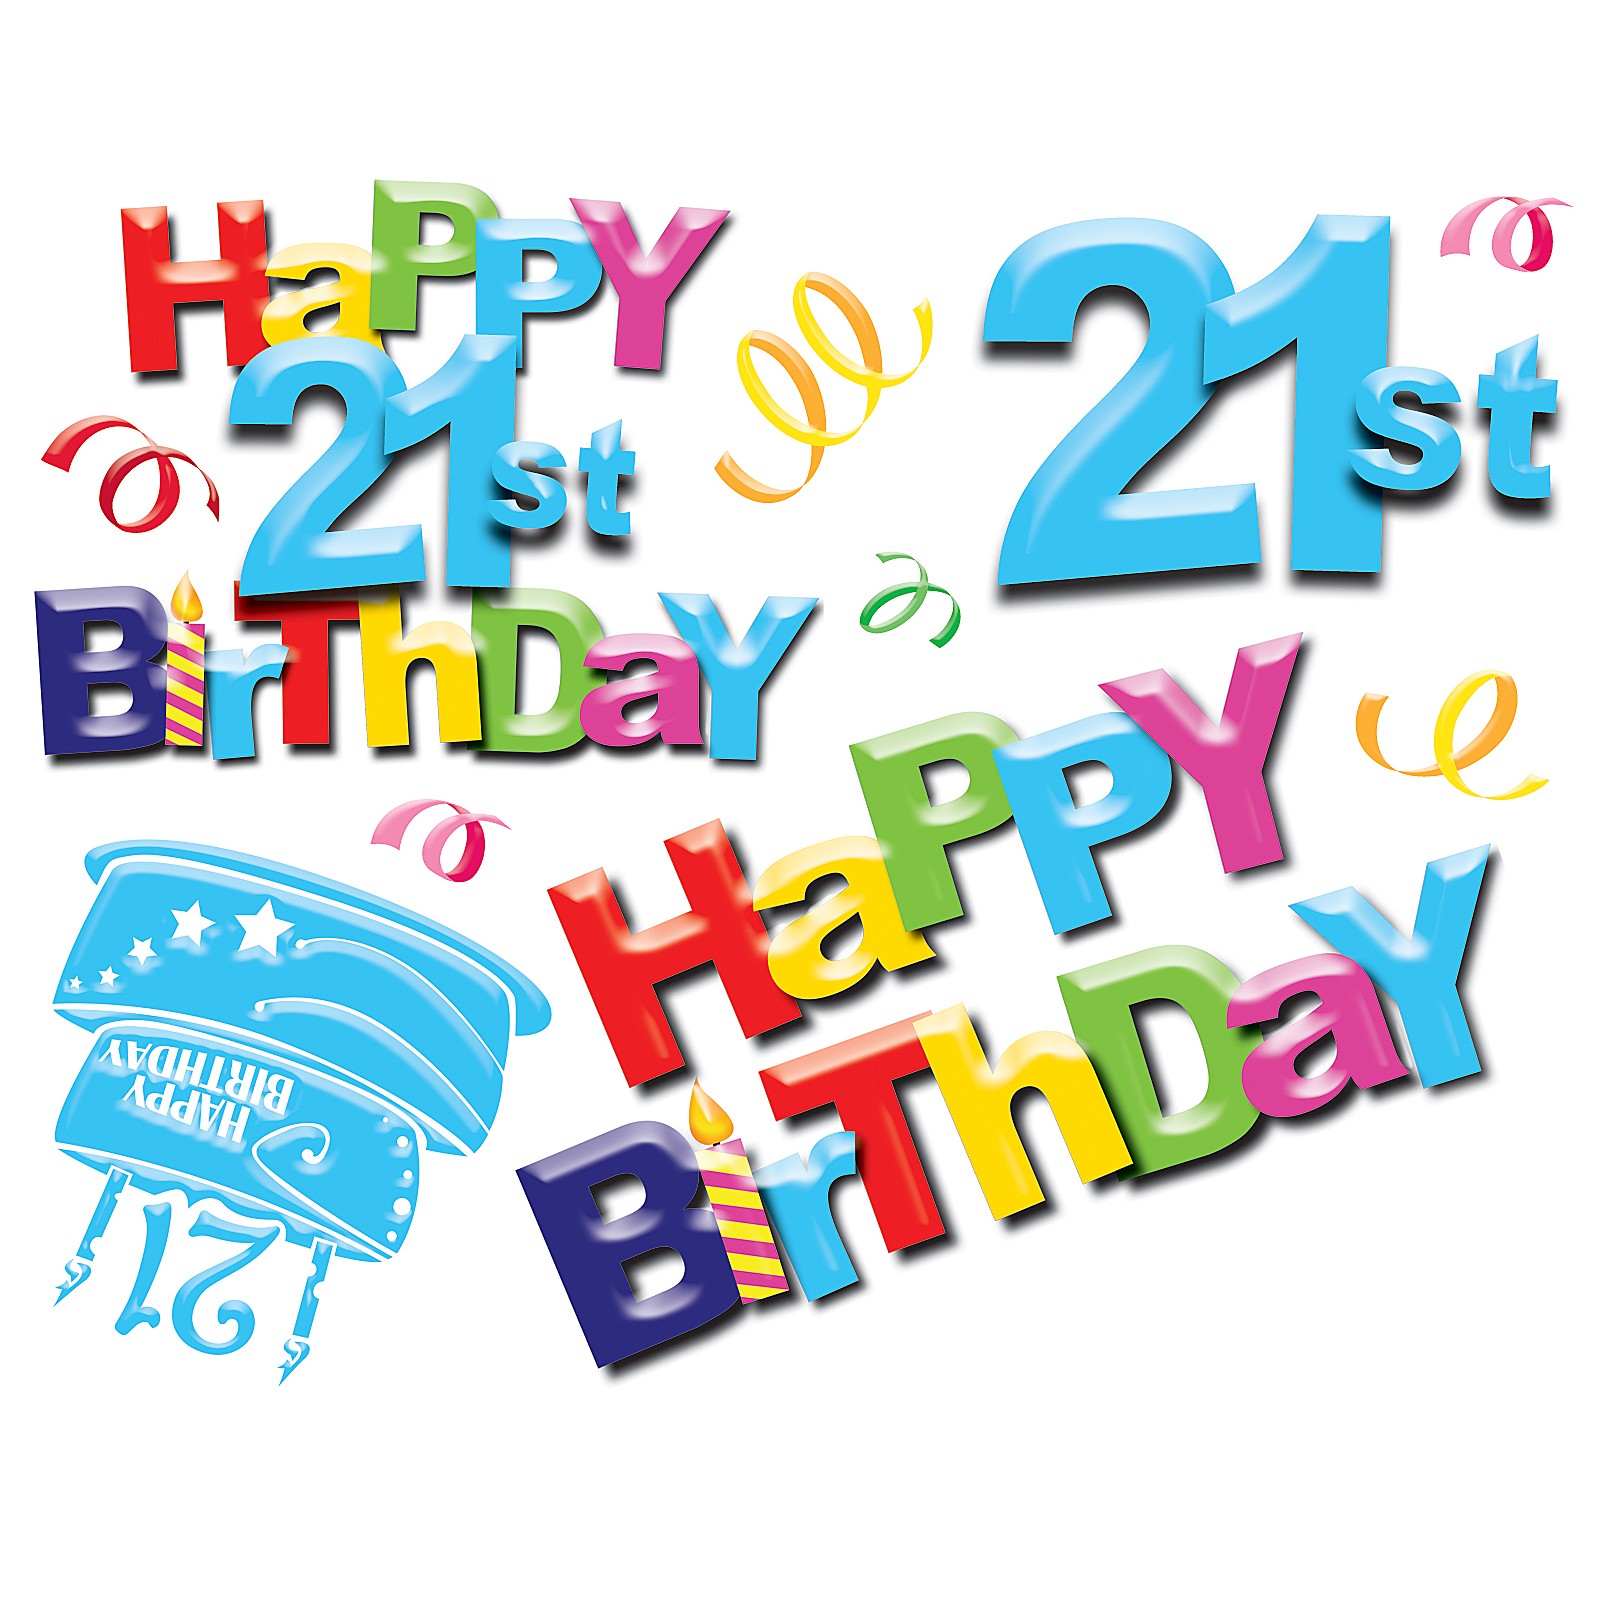 21st Birthday   Ideas For Celebrations   Best Birthday Wishes